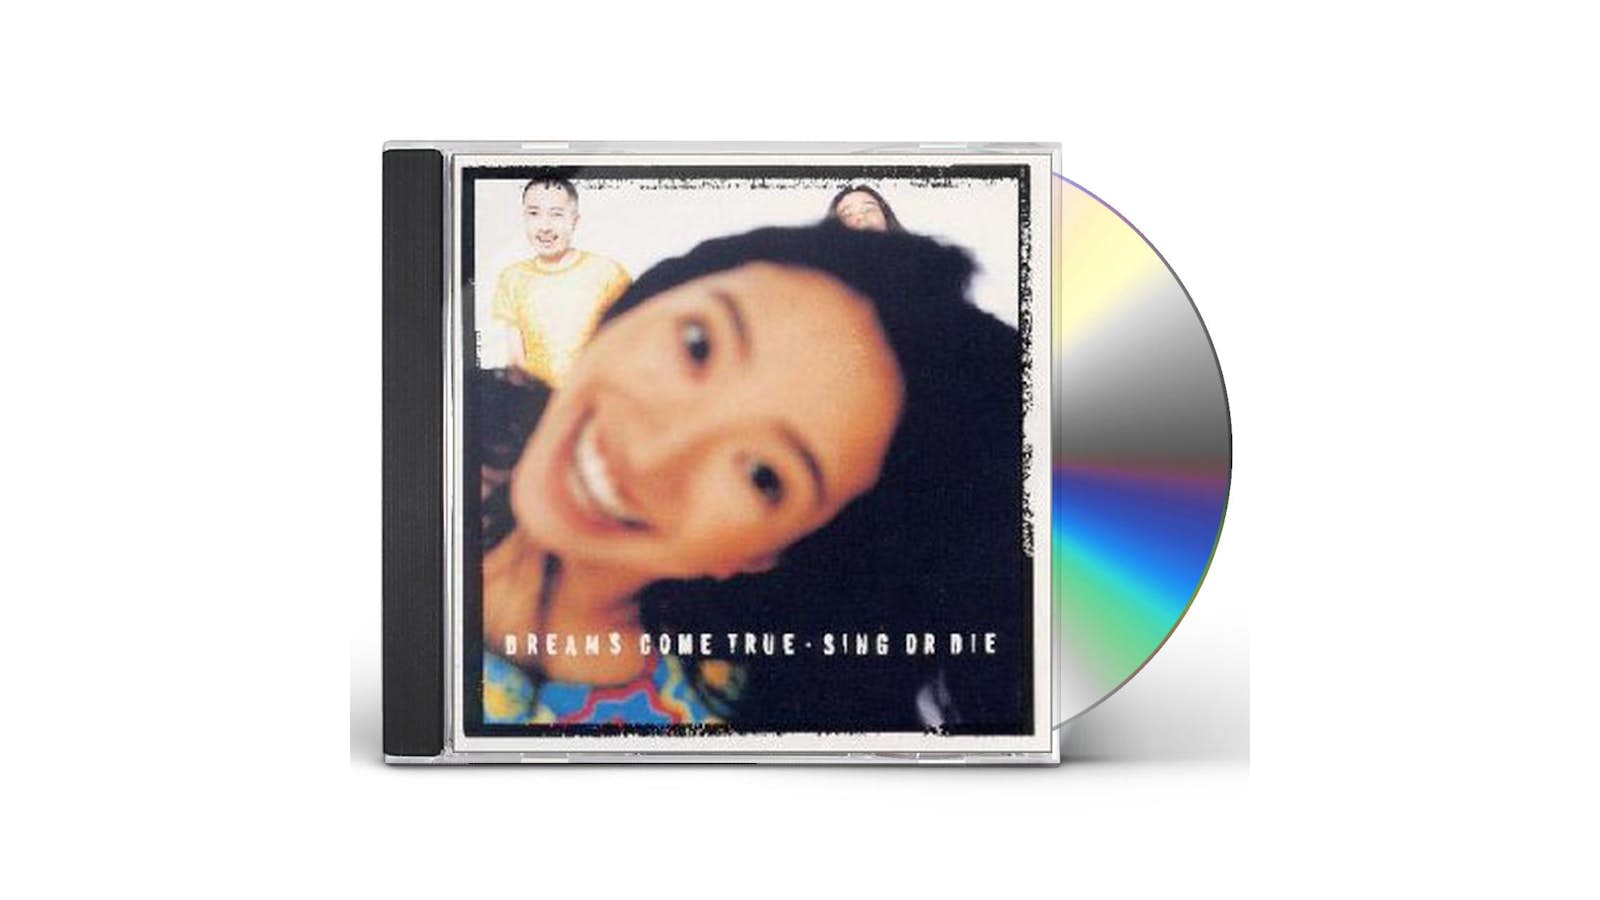 Linaria (From Koi to Yobu Ni Wa Kimochi Warui - Koikimo) [feat. André -  A!] [Cover] - Single - Album by Dianilis - Apple Music